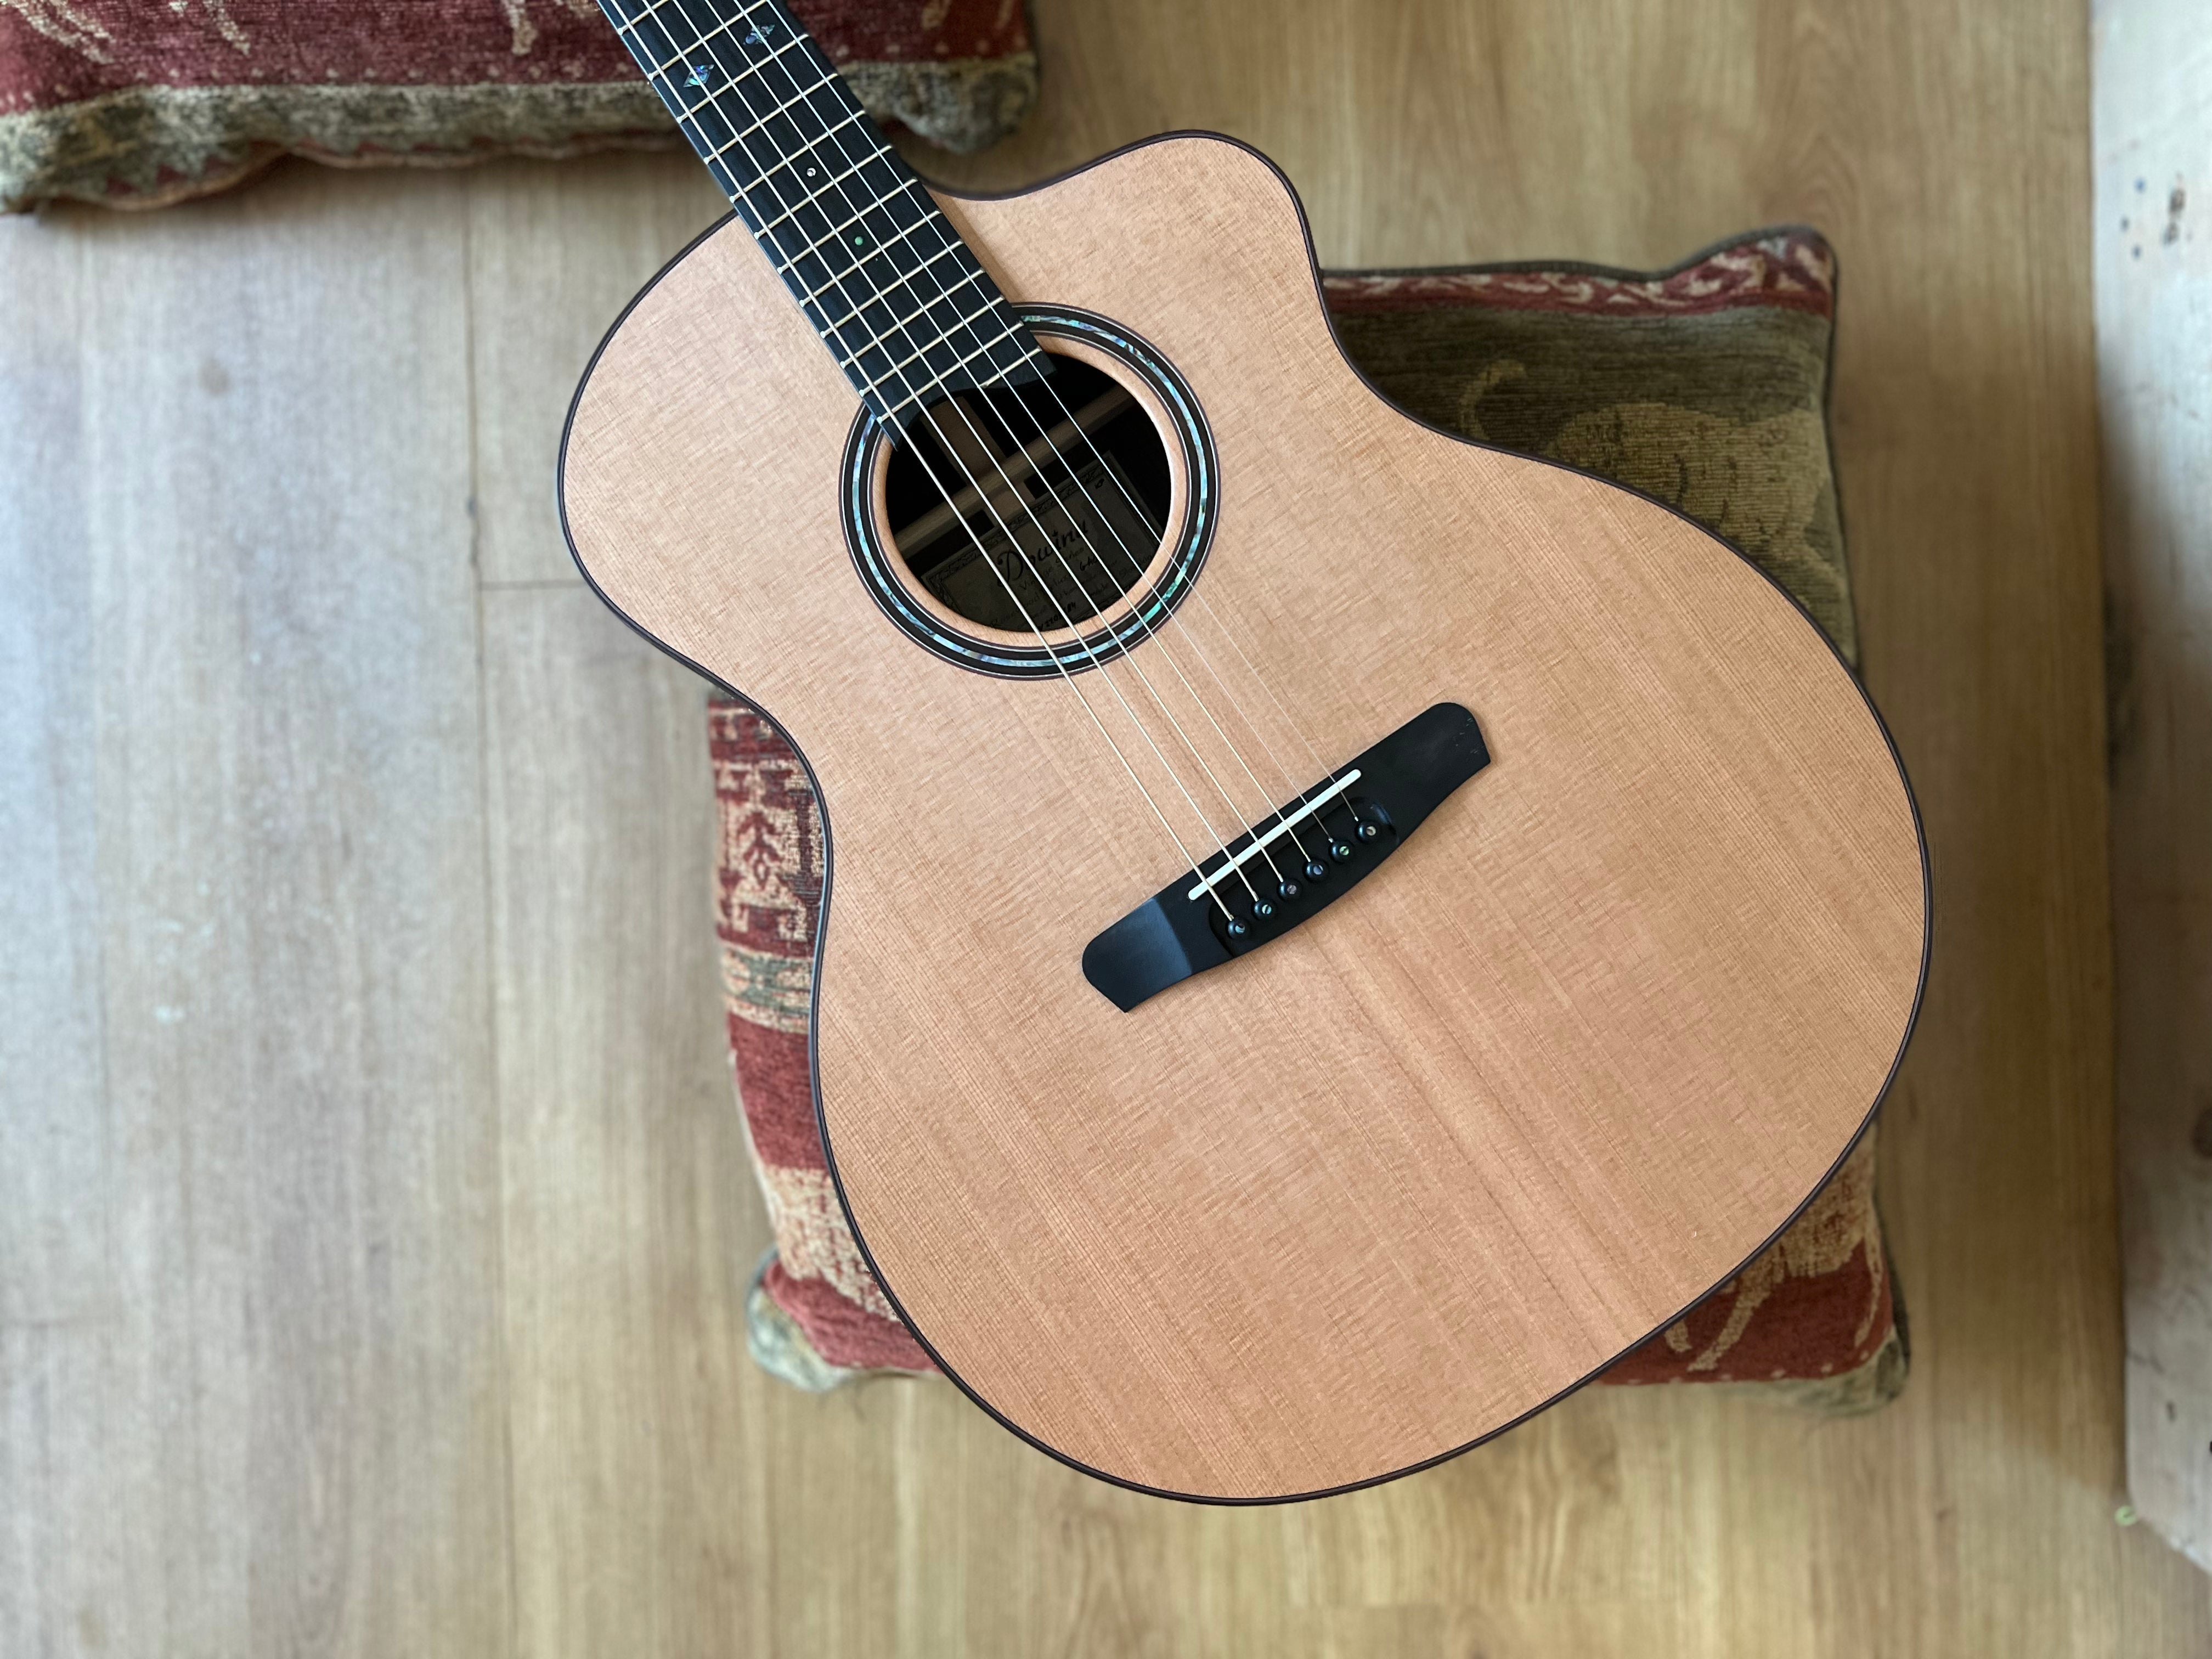 Dowina Rosewood GAC Acoustic Guitar, Acoustic Guitar for sale at Richards Guitars.